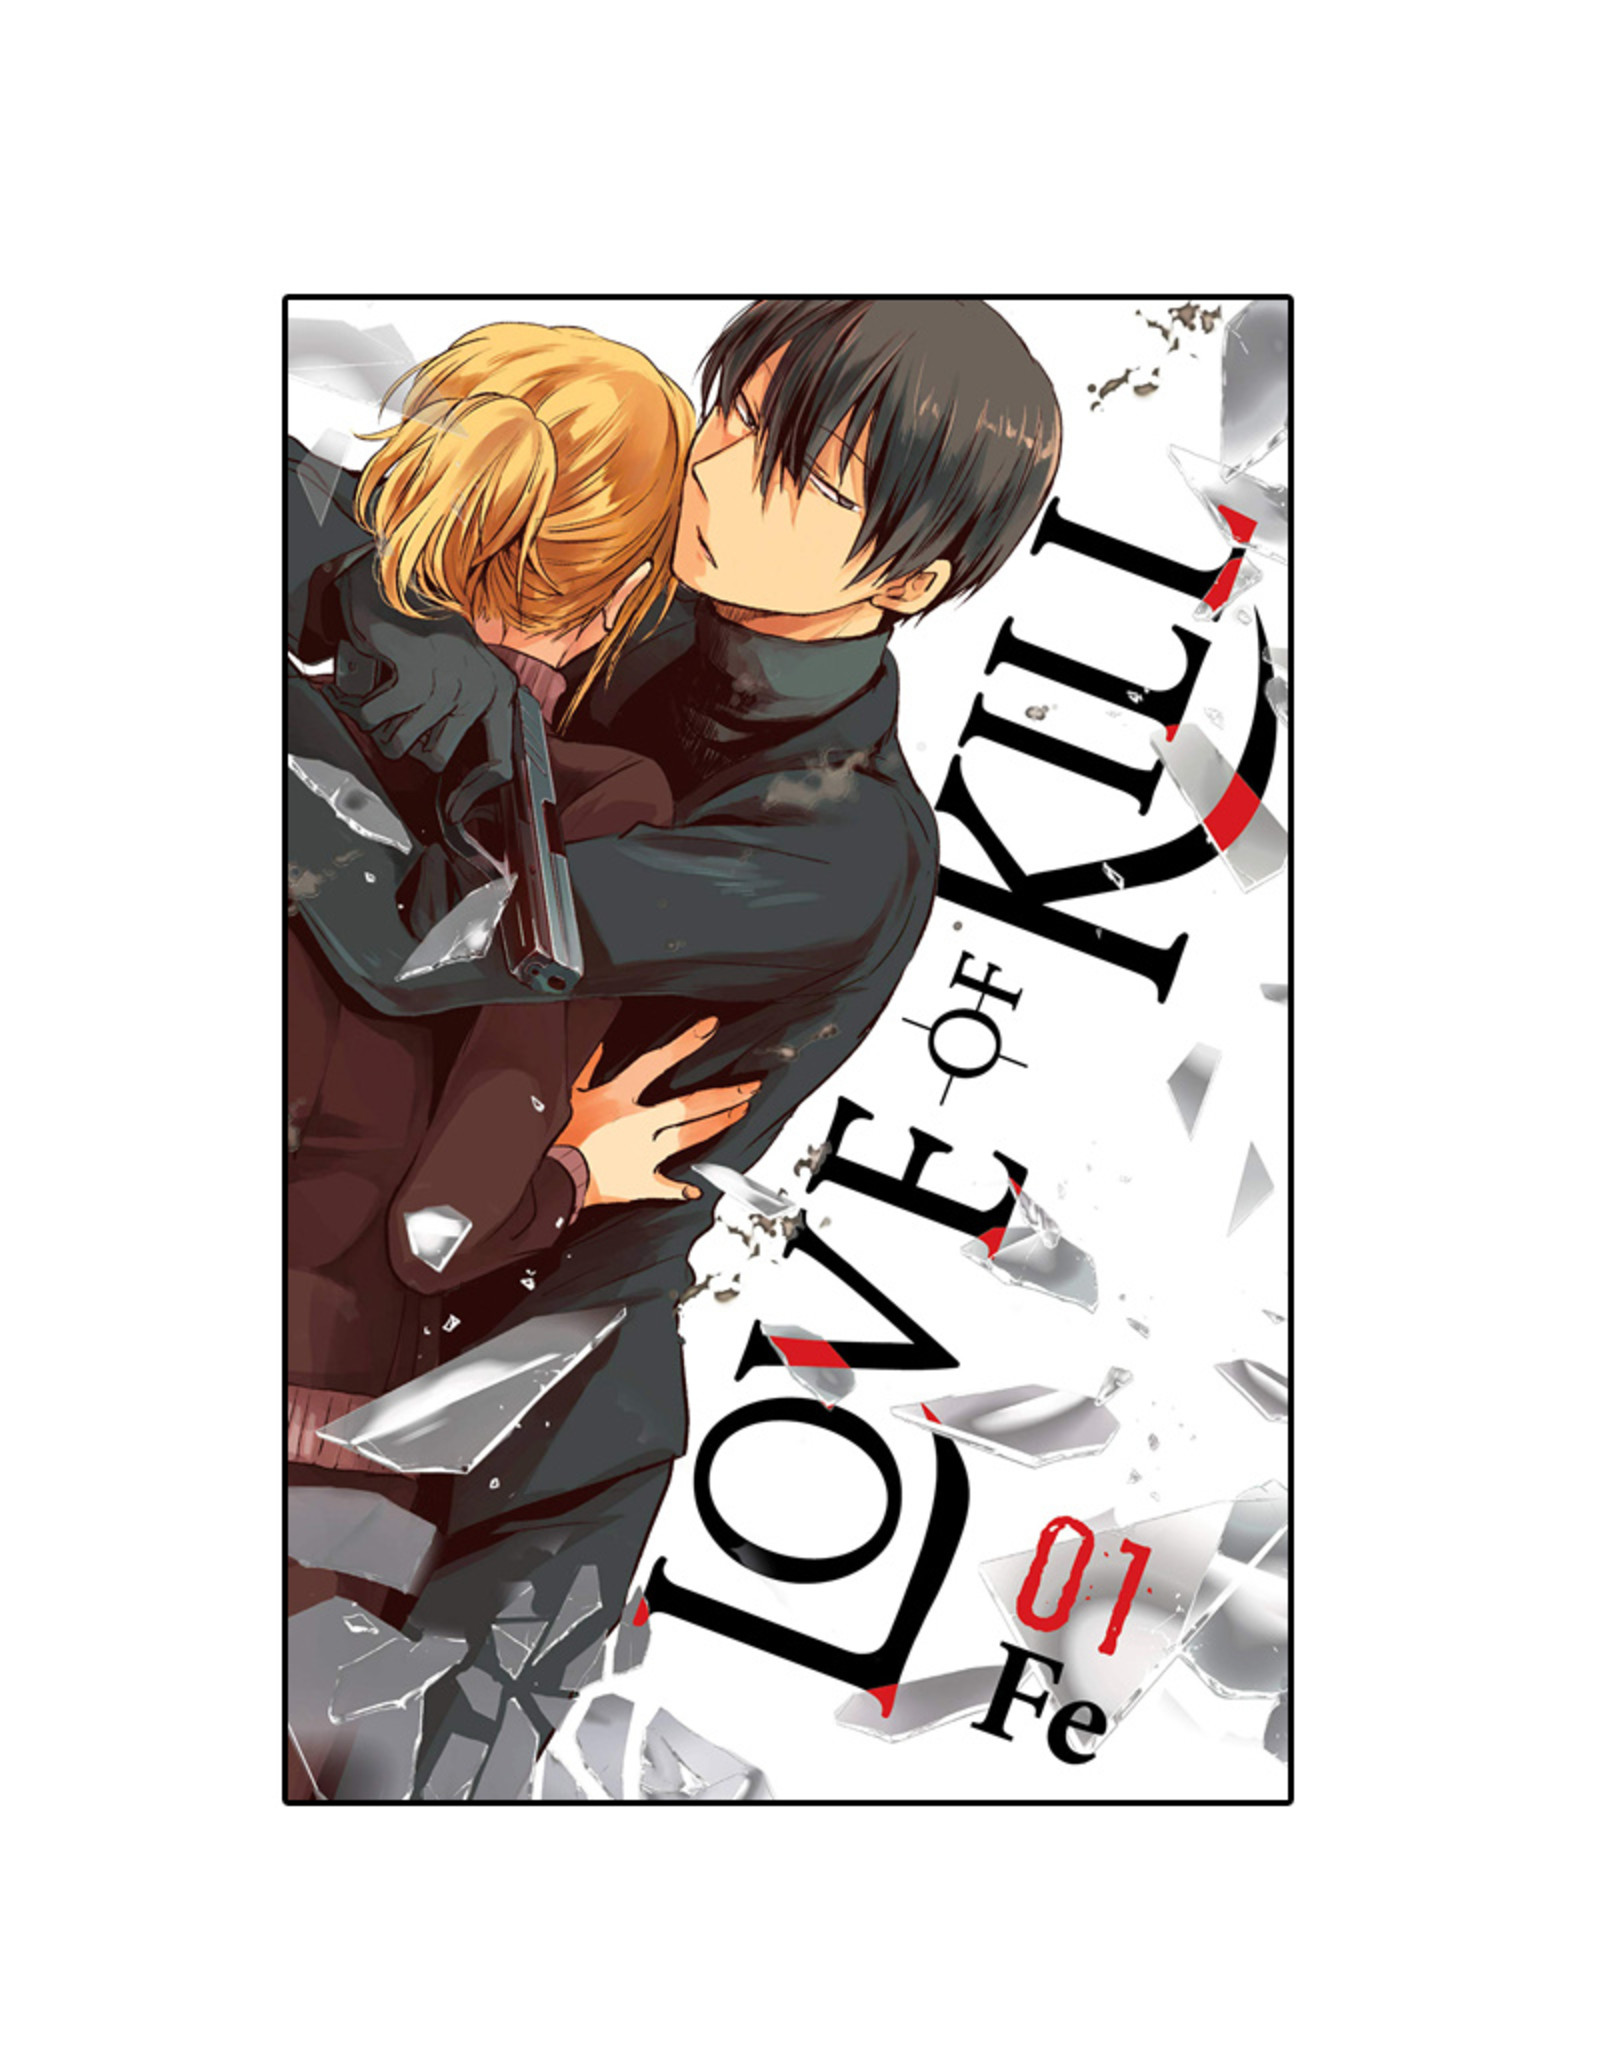 Yen Press Love of Kill Volume 01